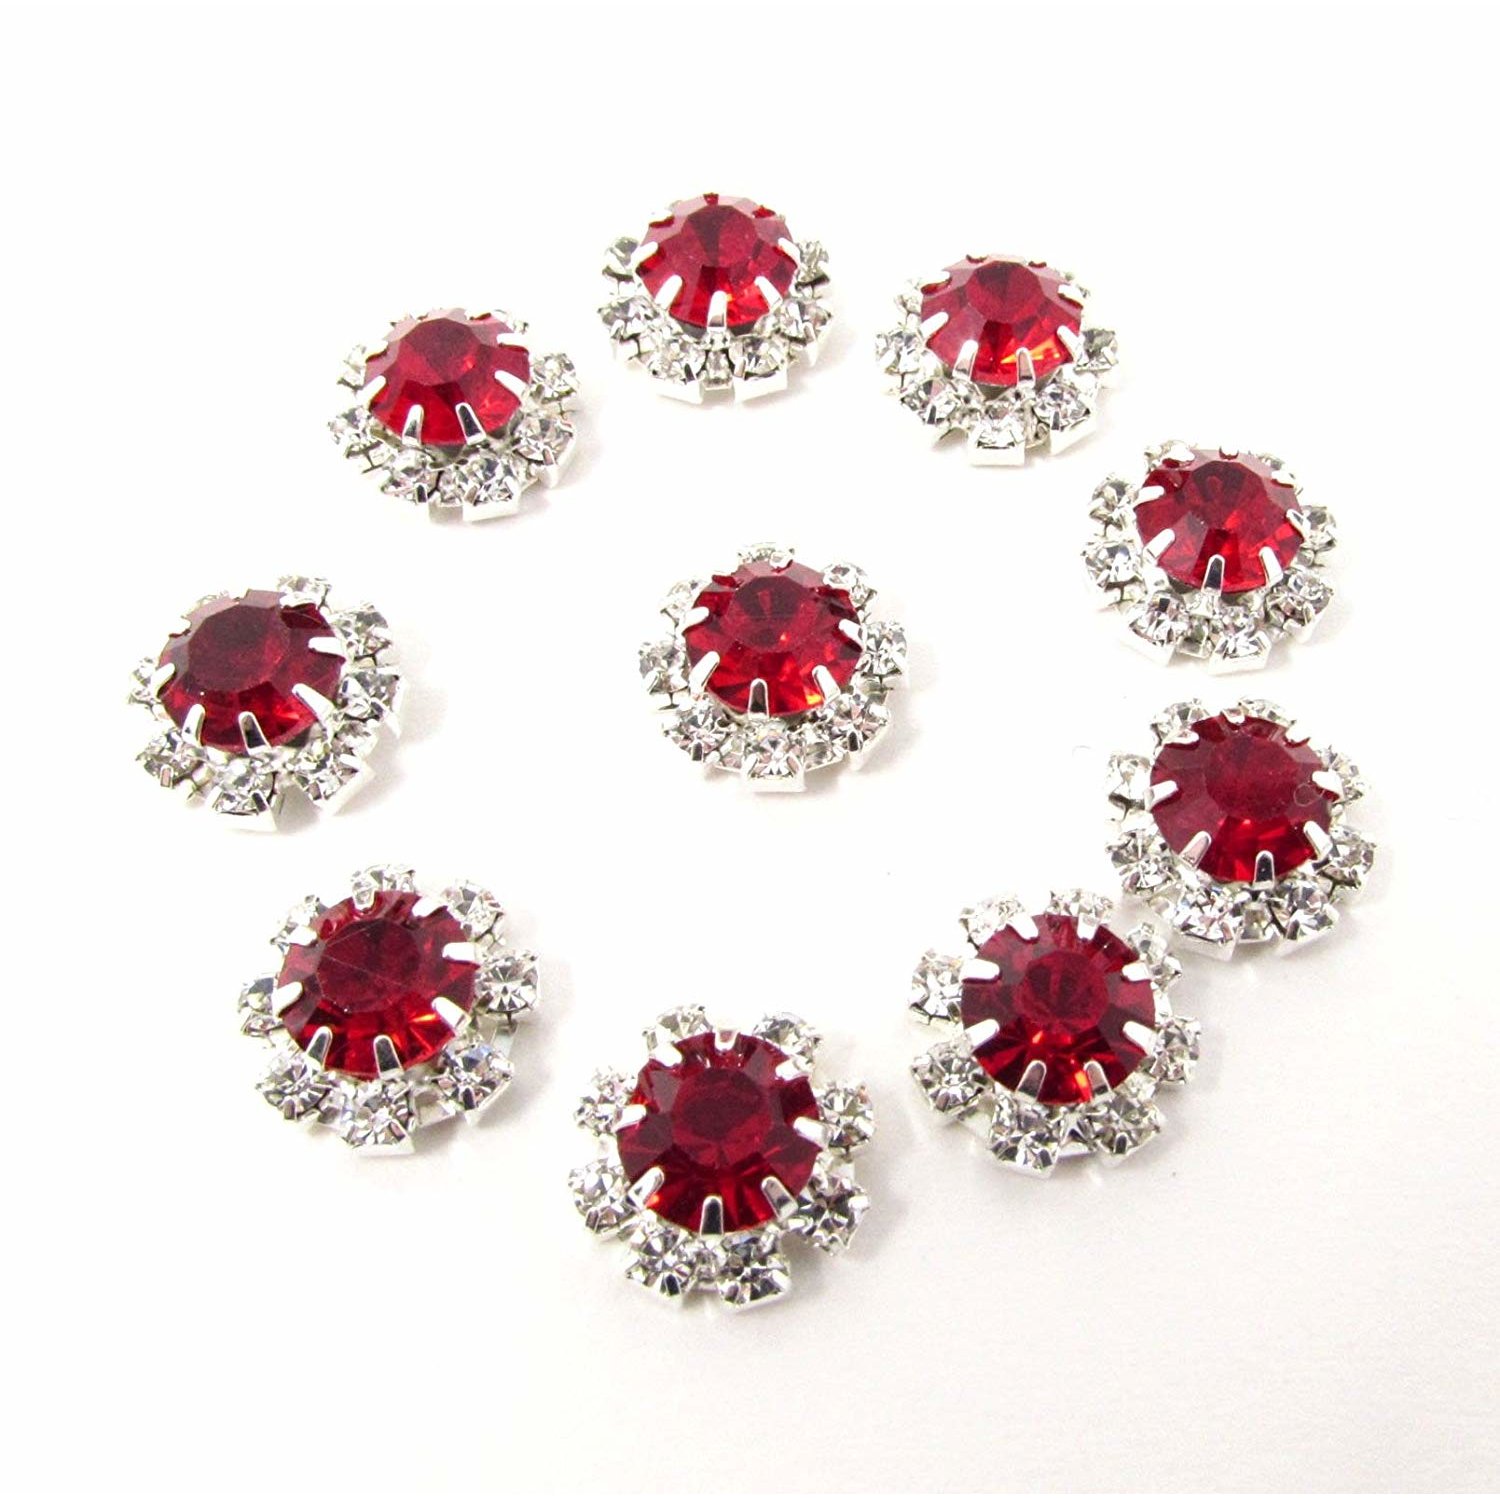 10 x Red Round Rhinestone Diamante Crystal Embellishment 9 Diamantes With Large Center Diamante 12mm